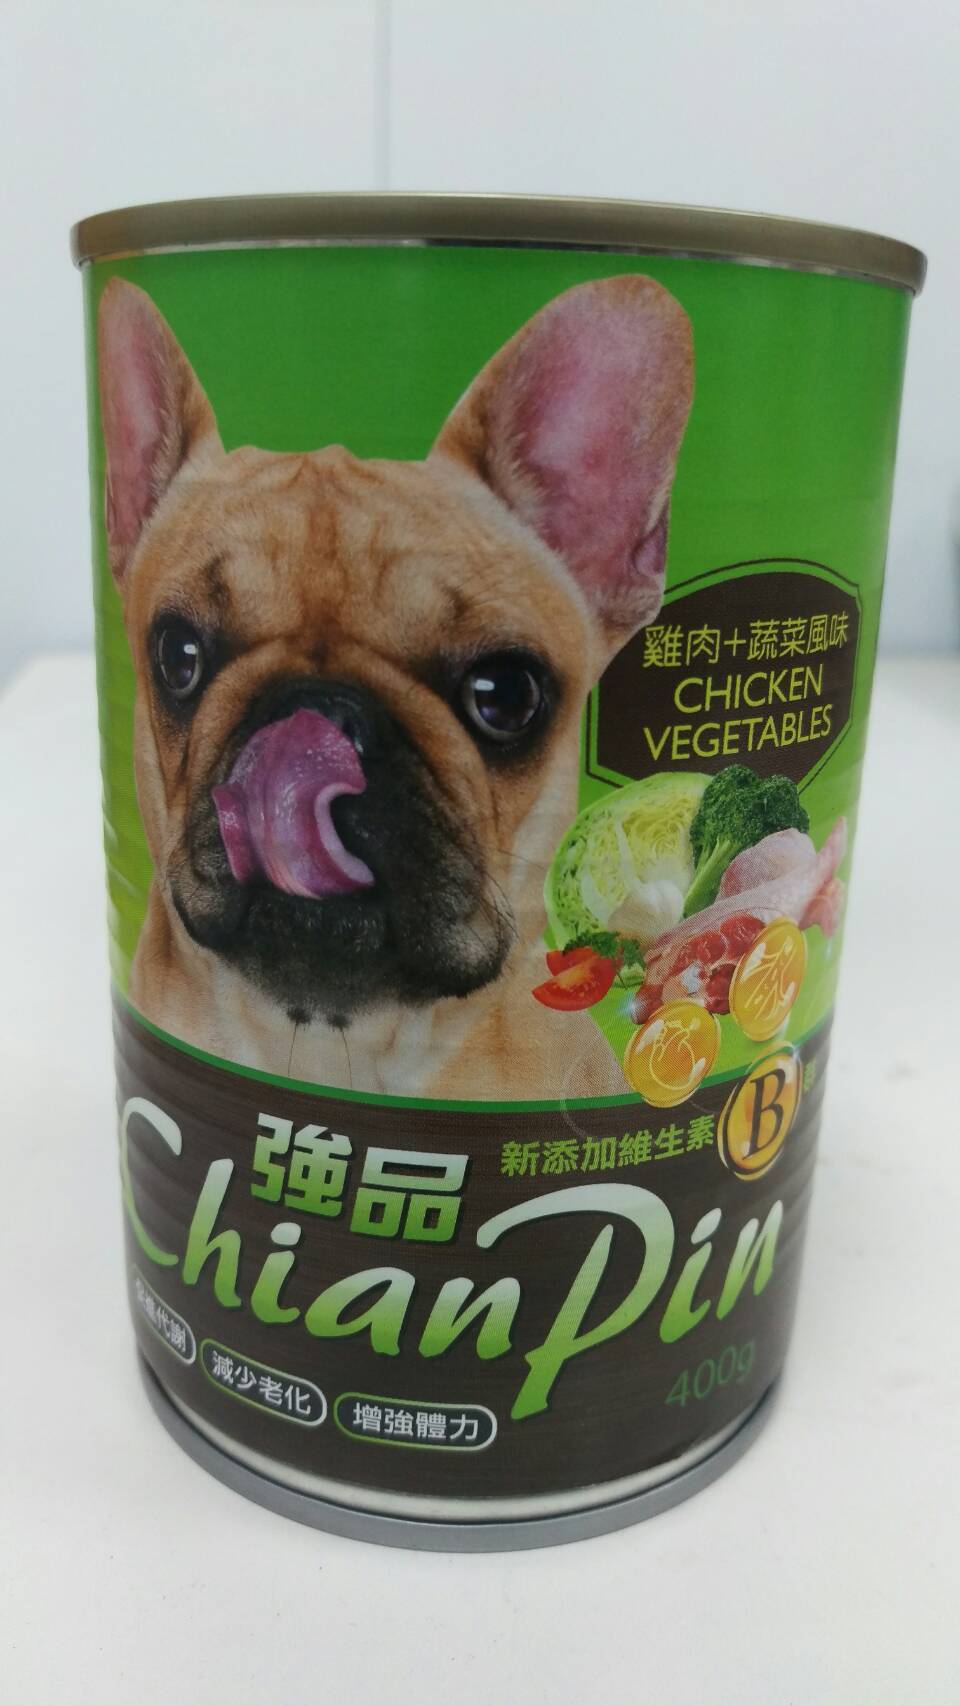 強品犬罐-雞肉+蔬菜風味
Chian Pin dog can- chicken+vegetable